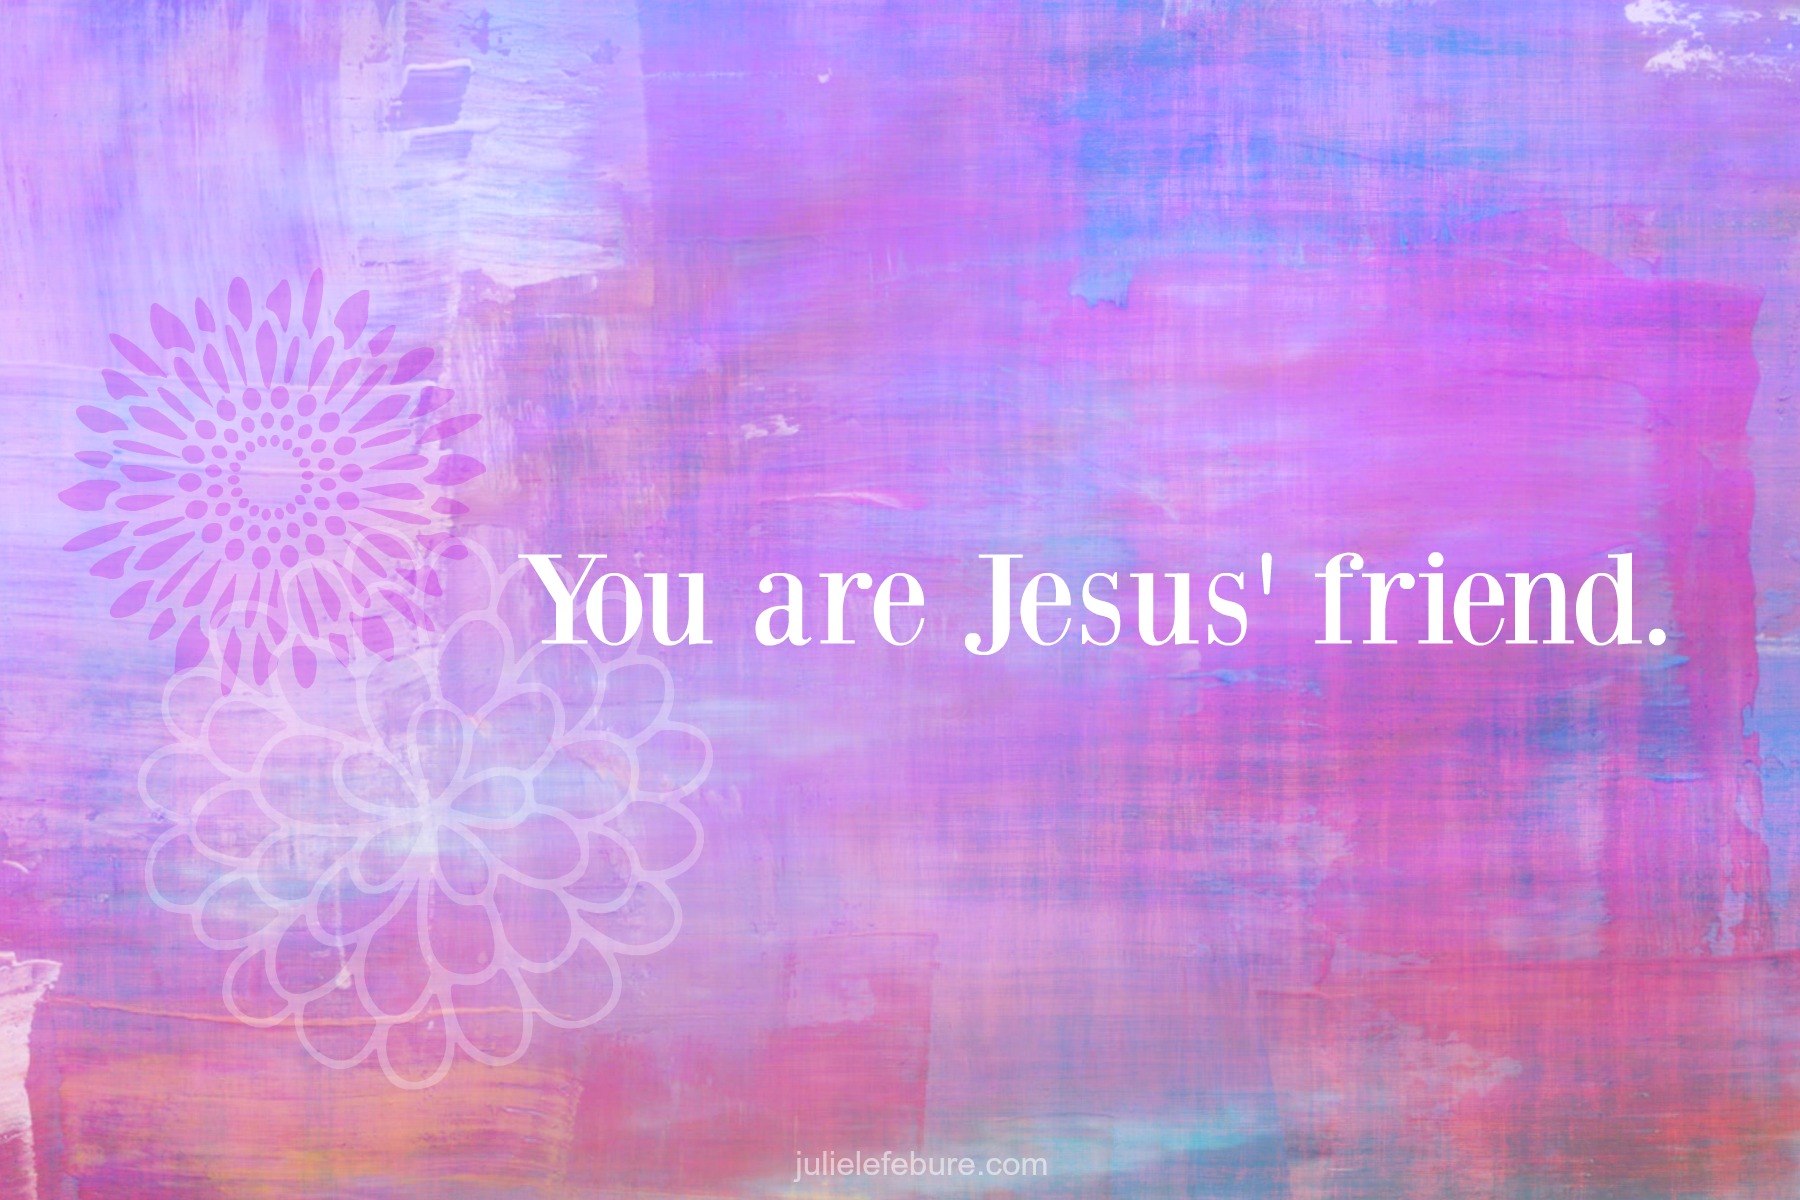 Friend, You Are Jesus’ Friend